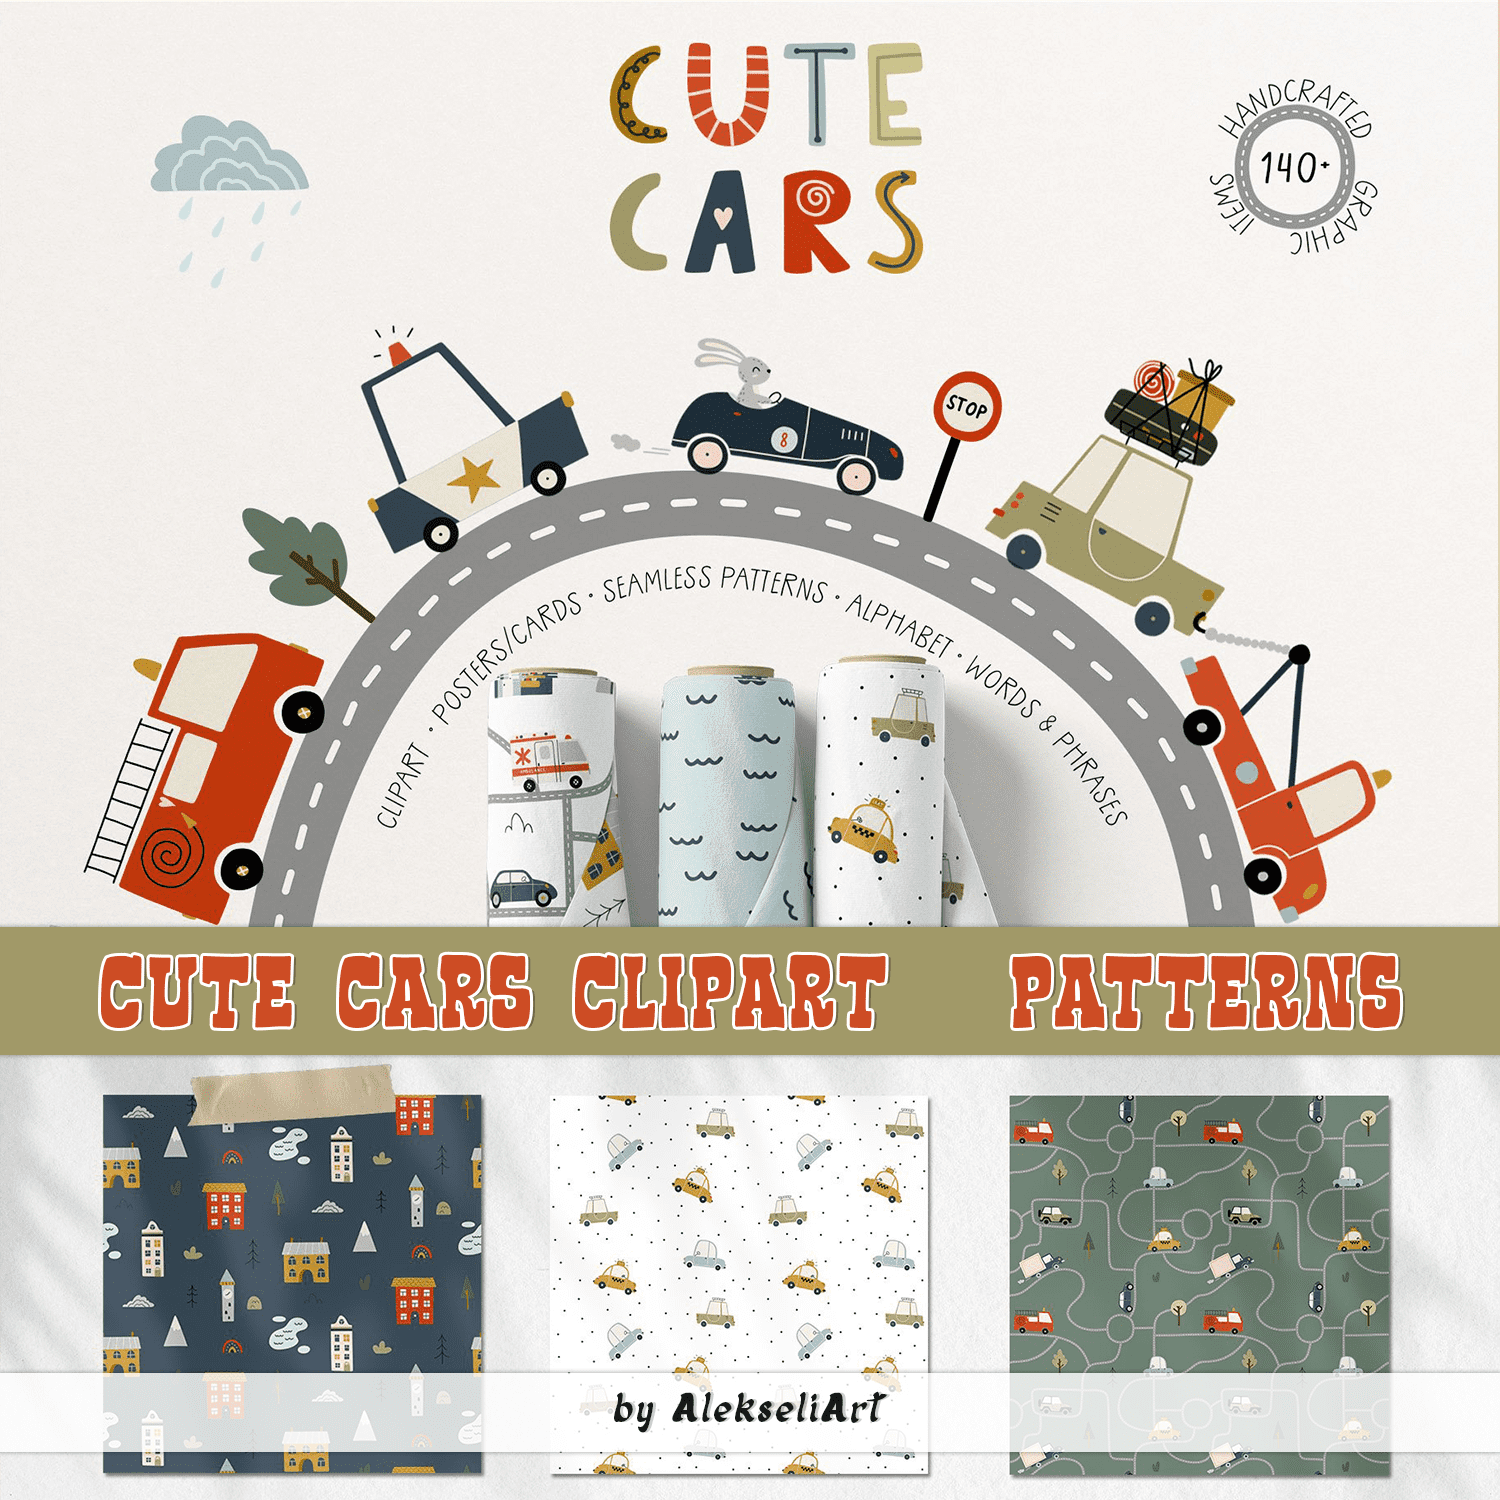 Cute Cars Clipart & Patterns.